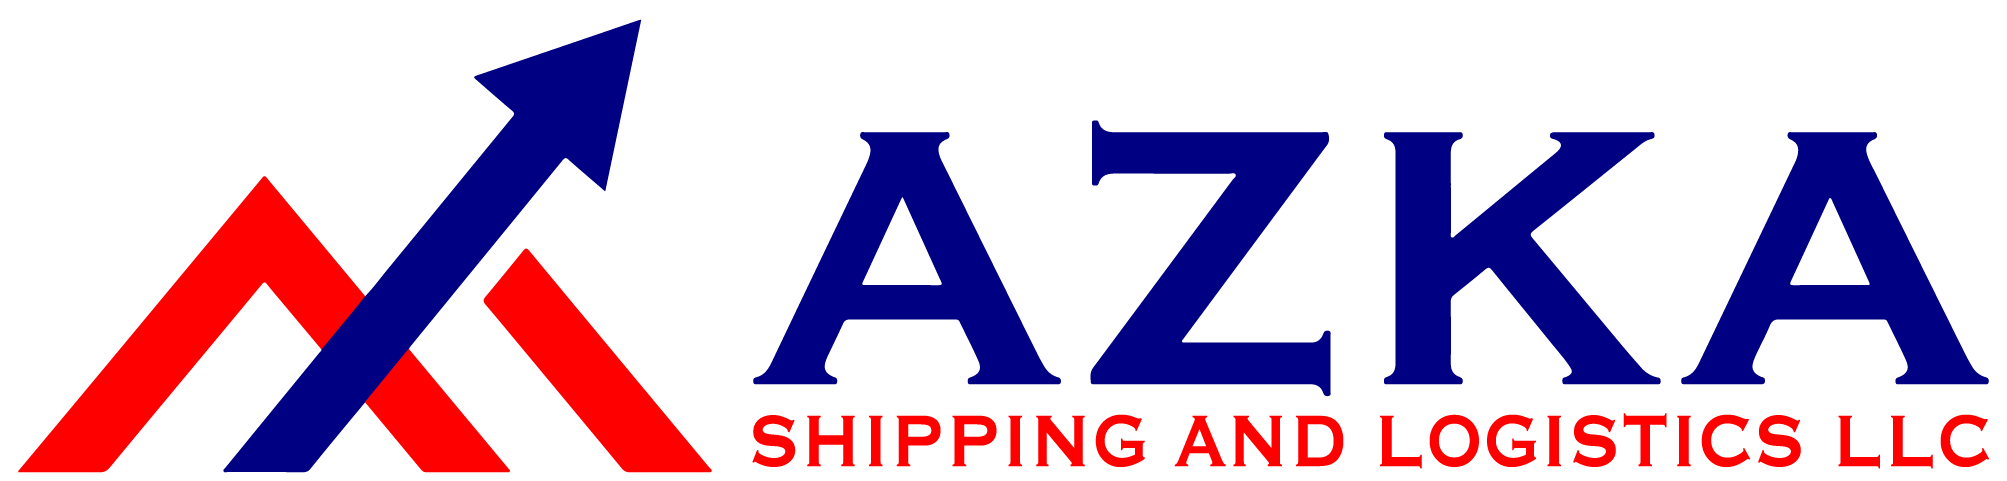 AZKA SHIPPING AND LOGISTICS LLC